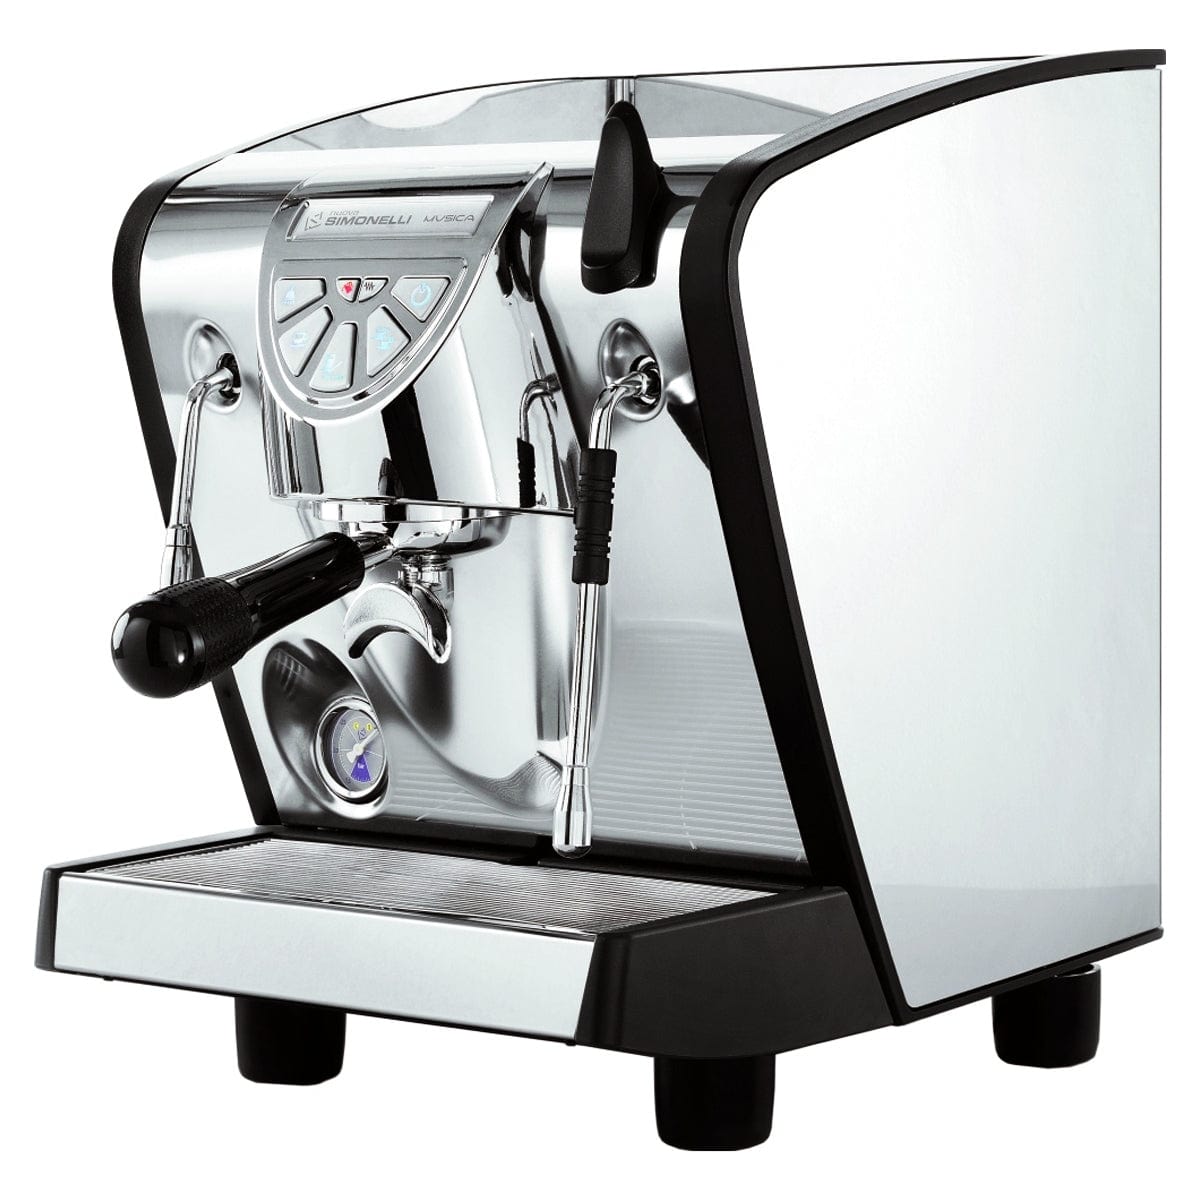 Nuova Simonelli Musica Espresso Machine Volumetric - Majesty Coffee